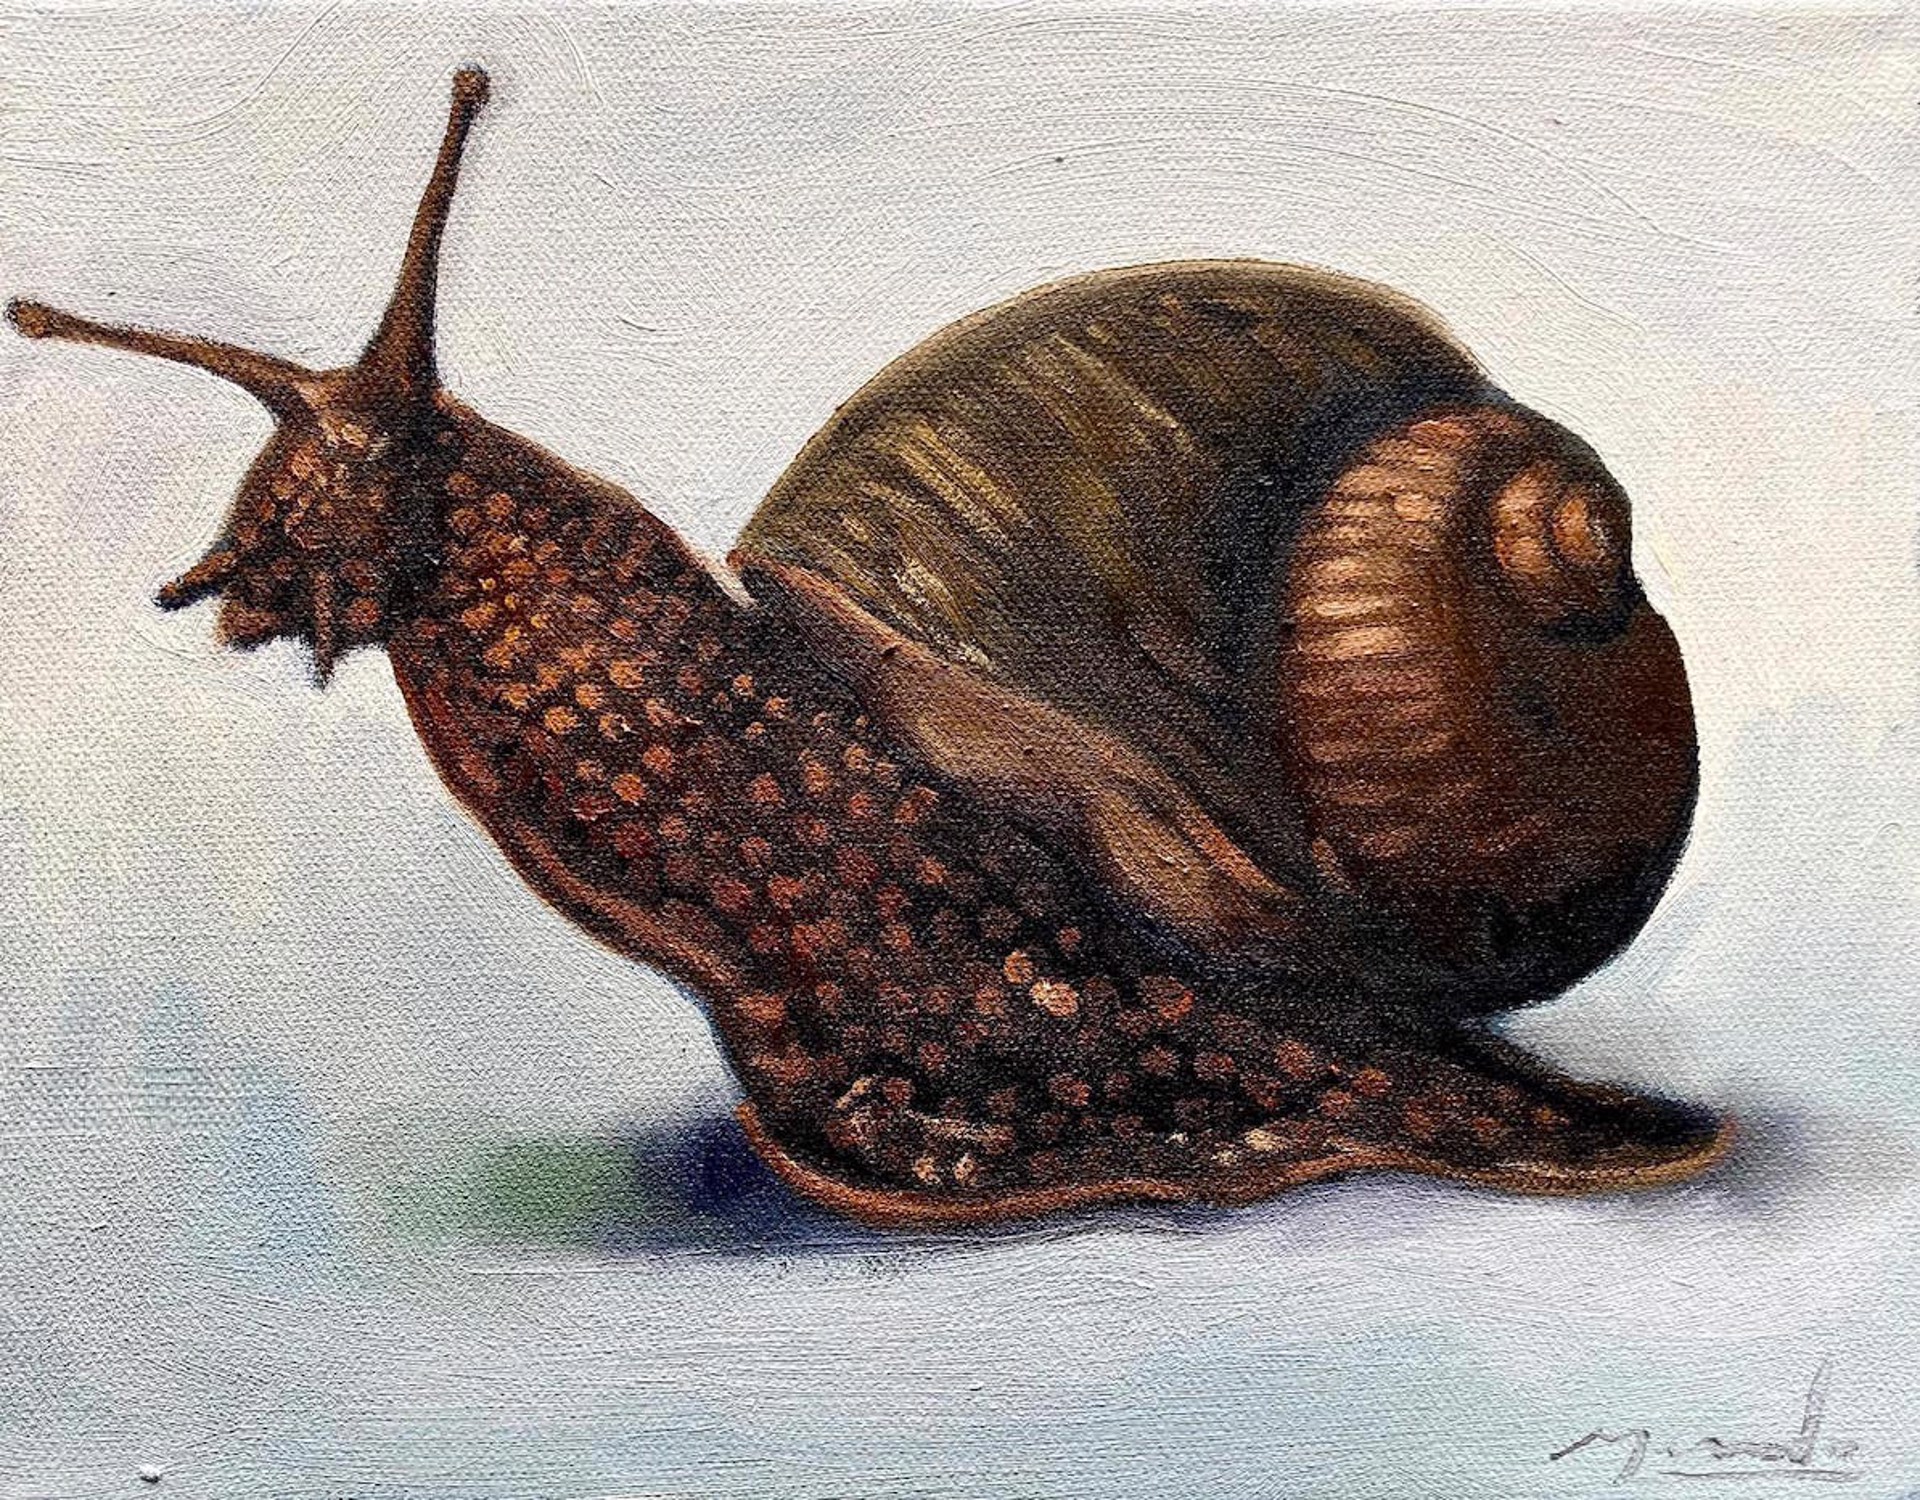 Golden Brown Snail by Gerardo Madrigal